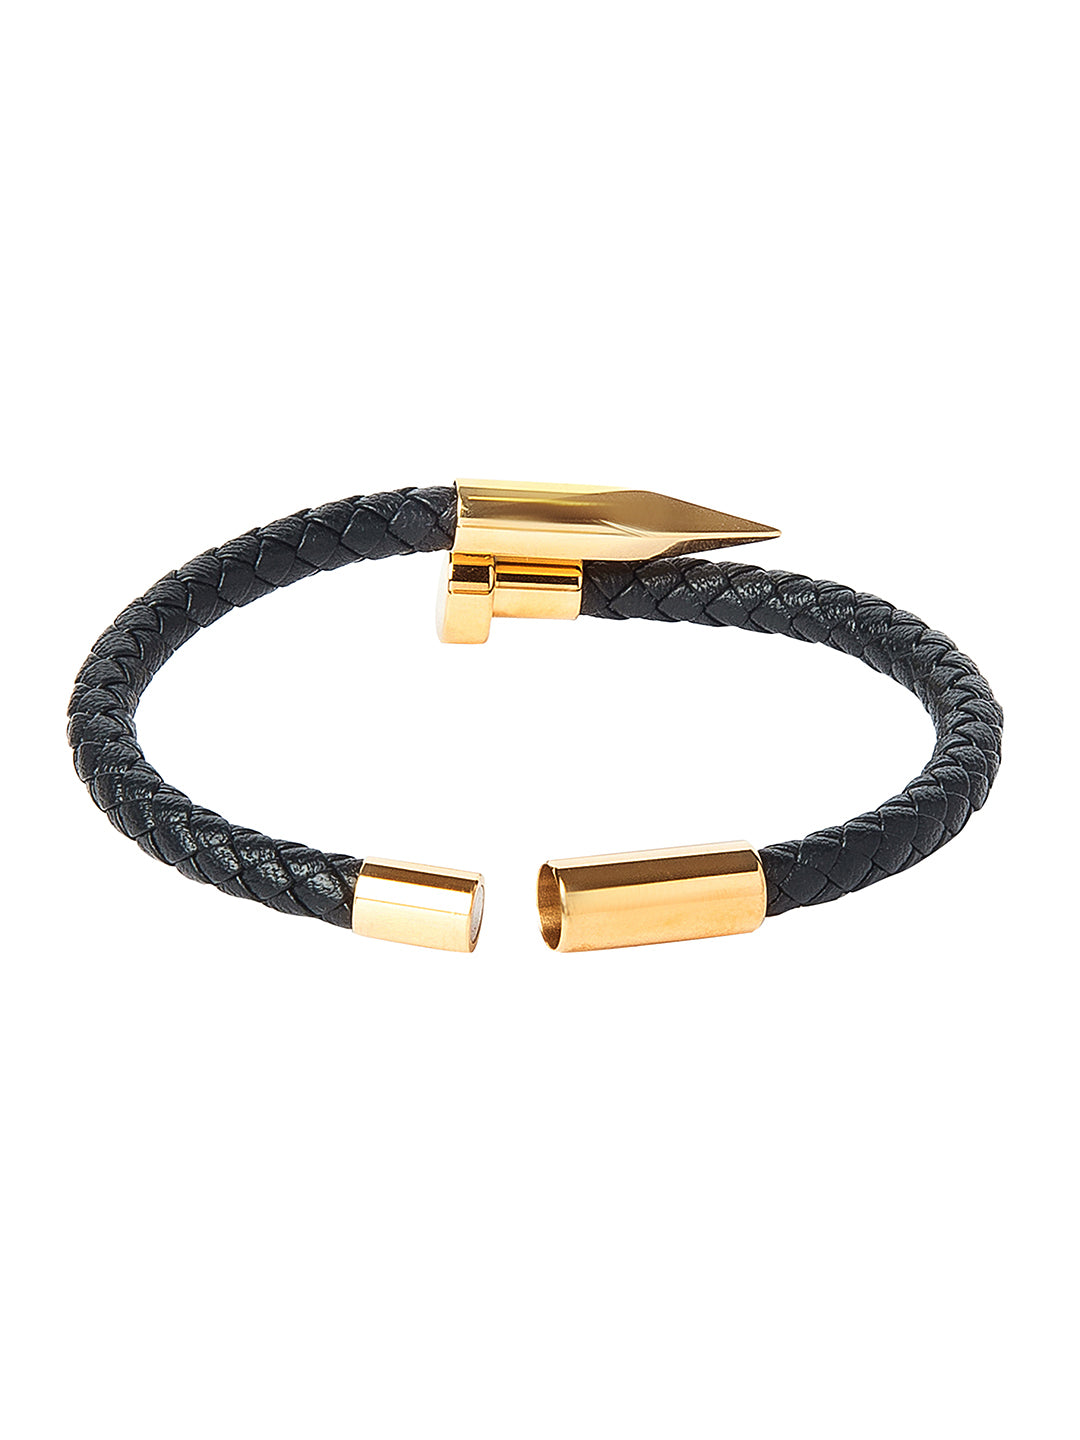 Nexus Rope Bracelet, Matte Black Rhodium | Men's Bracelets | Miansai